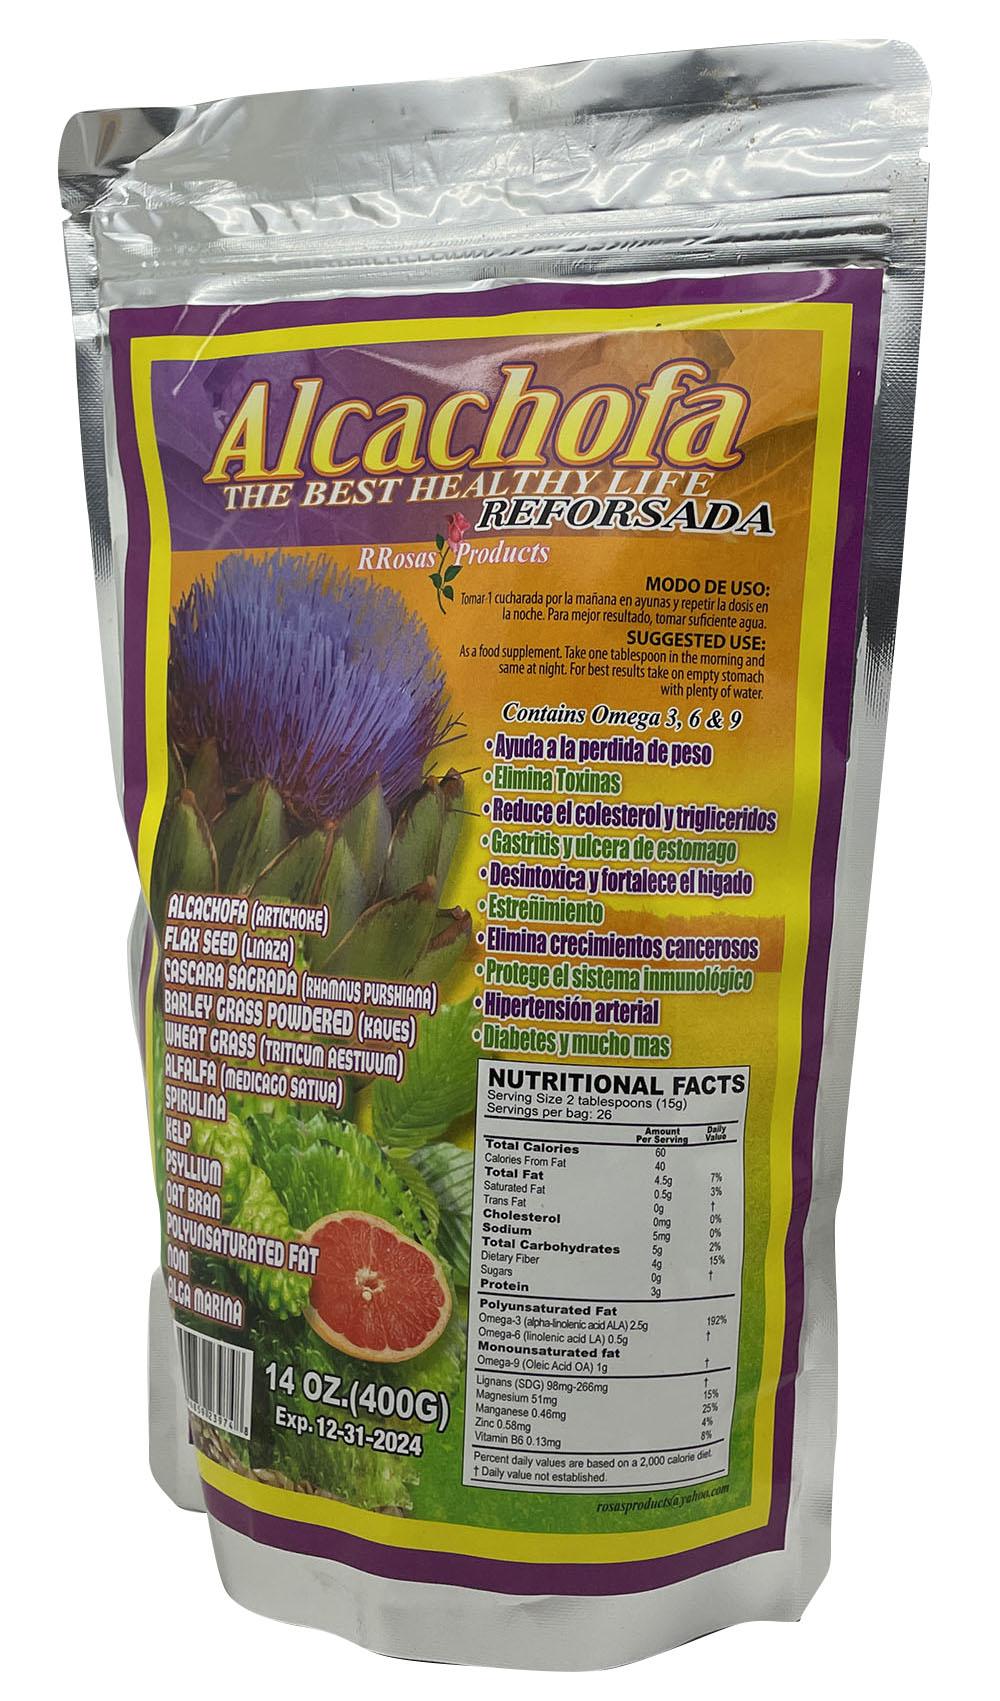 Alcachofa Reforsada Powder the Best Healthy Life 14 Oz Artichoke & Much More Ingredients - image 1 of 1